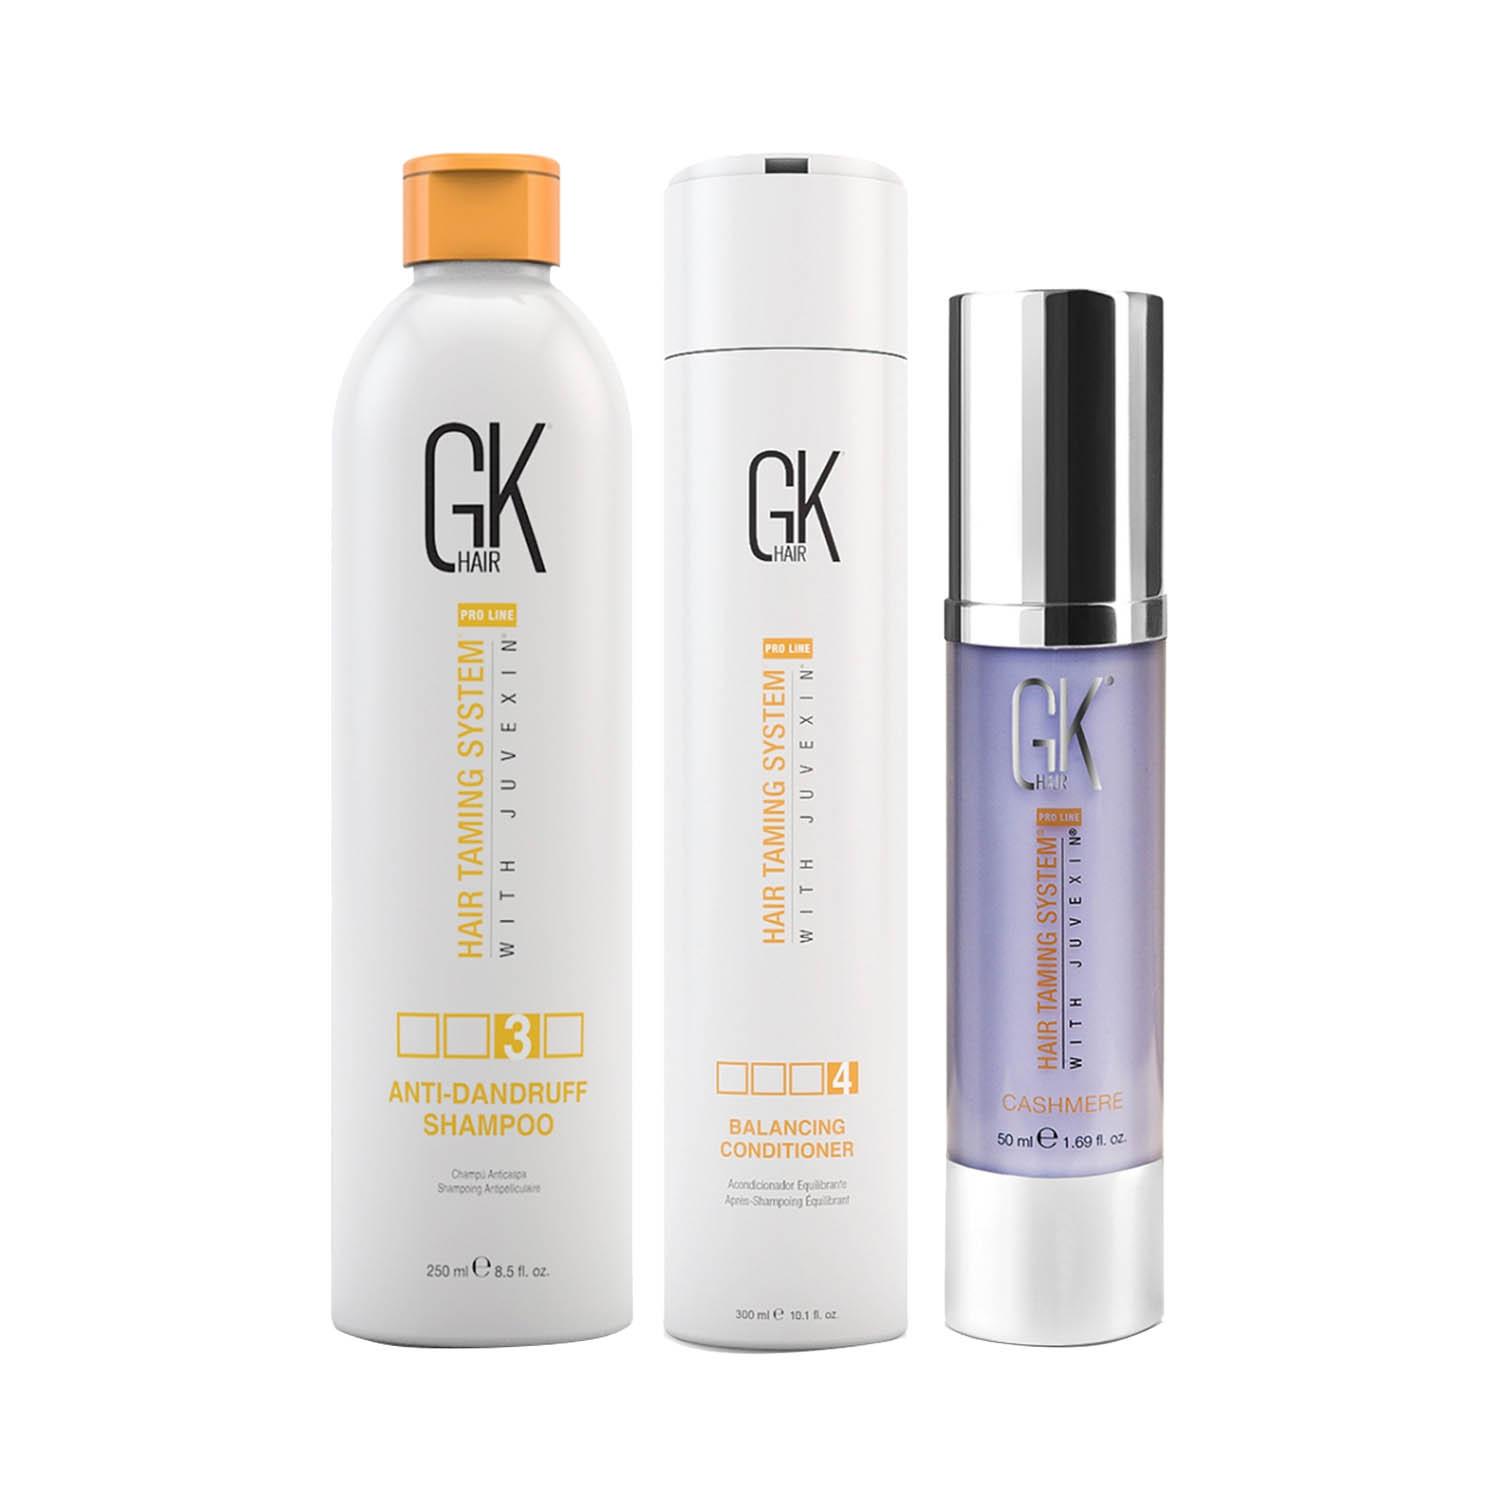 GK Hair Anti Dandruff Shampoo 250ml with Balancing Conditioner 300ml and Cashmere 50ml